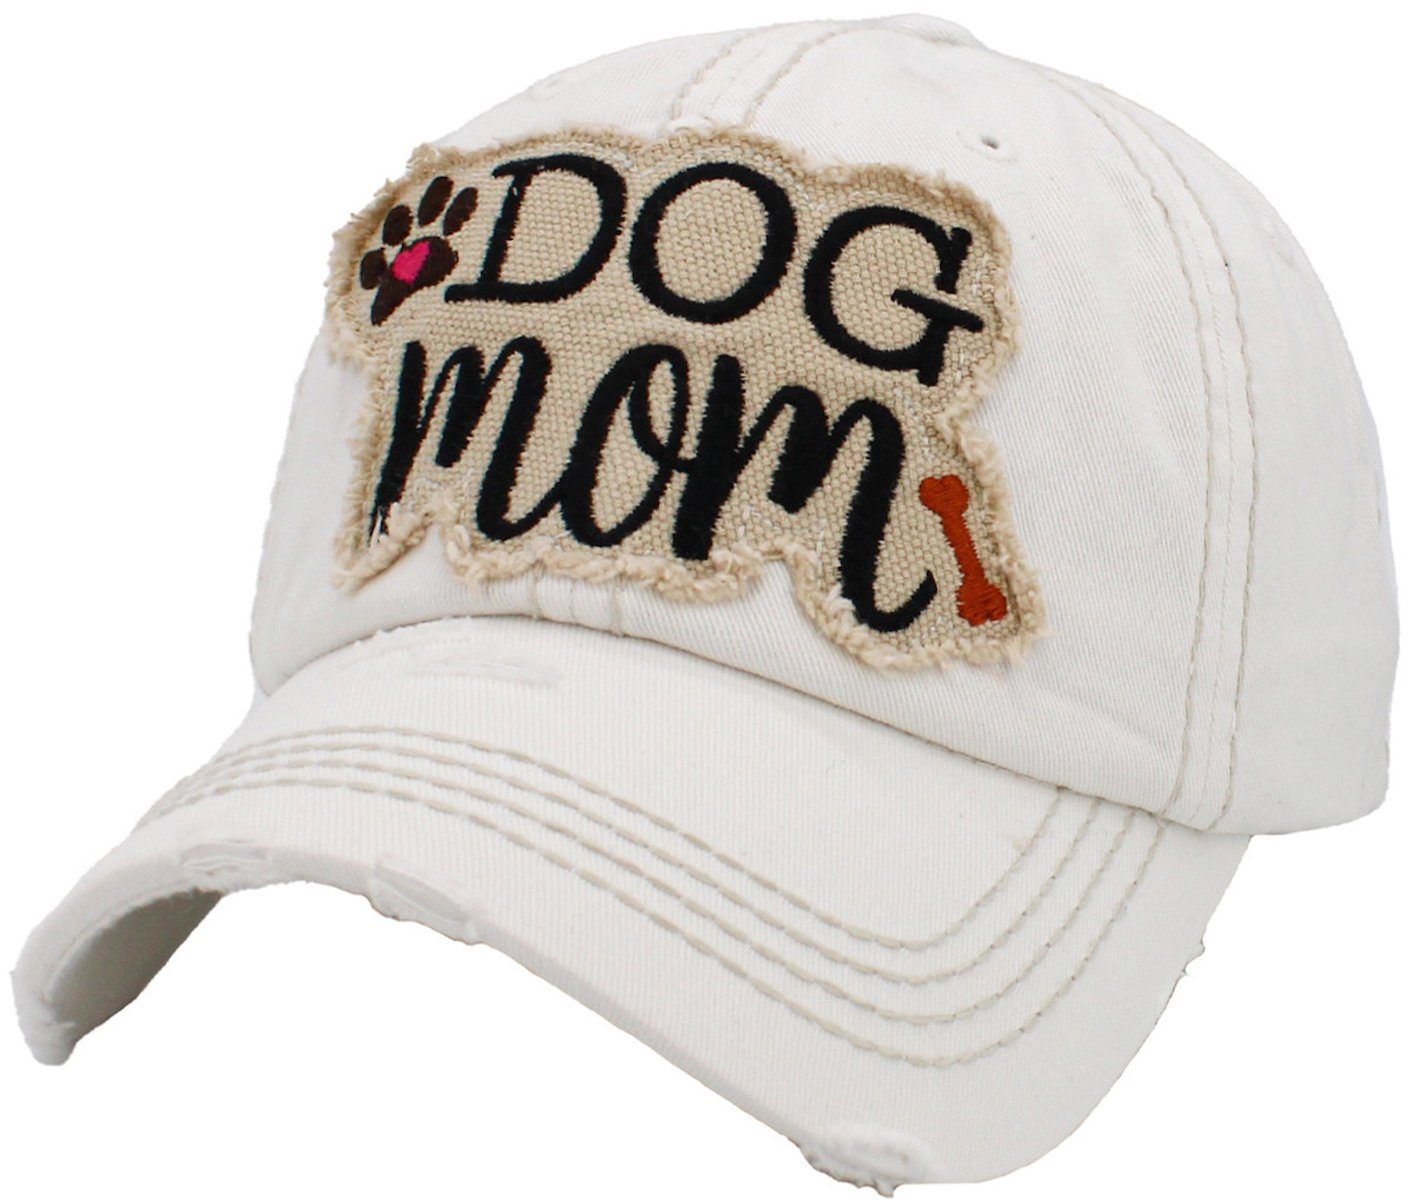 Mom used Baseballcap Vintage Sporty Vintage Look Damen Cap Cap Washed Baseball Dog weiß